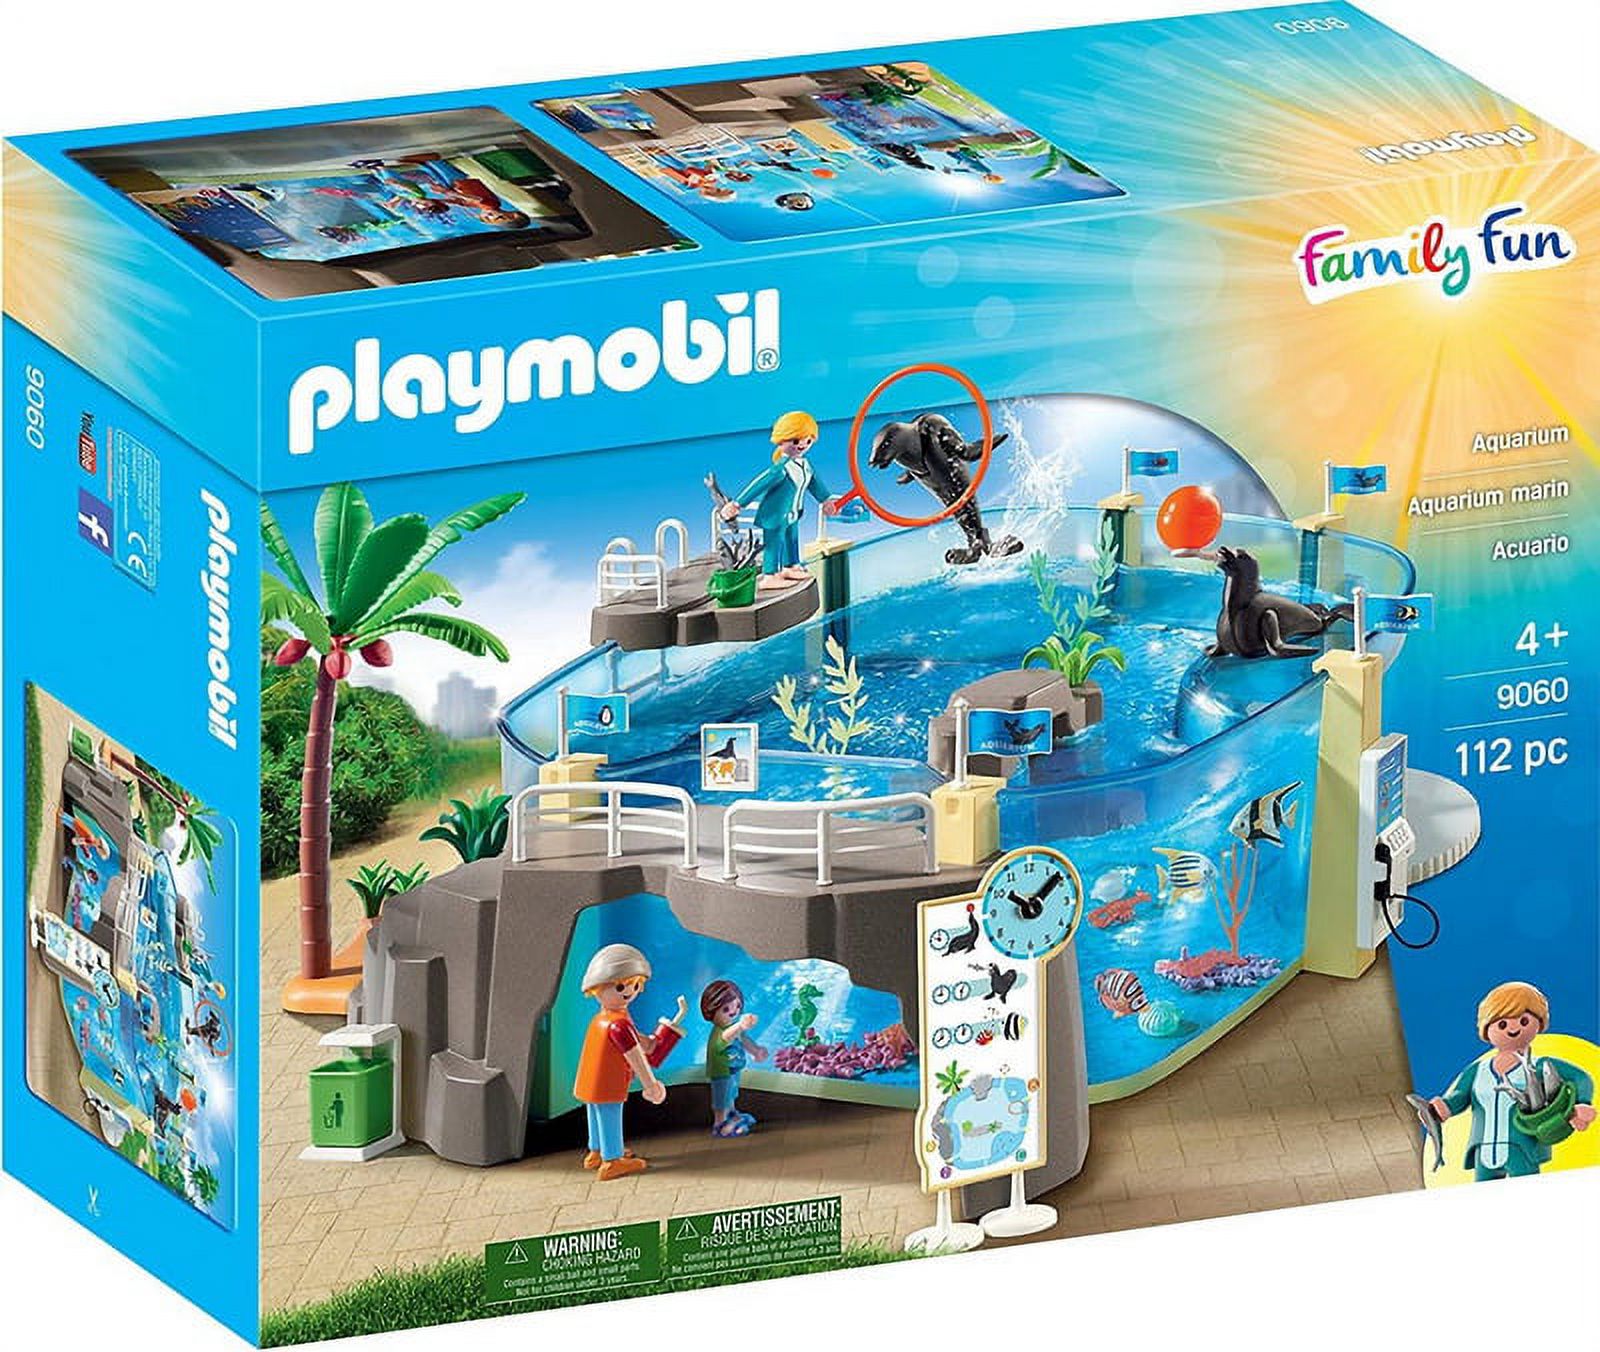 Playmobil 9060 Aquarium Building Set | 112 Pieces - image 1 of 4